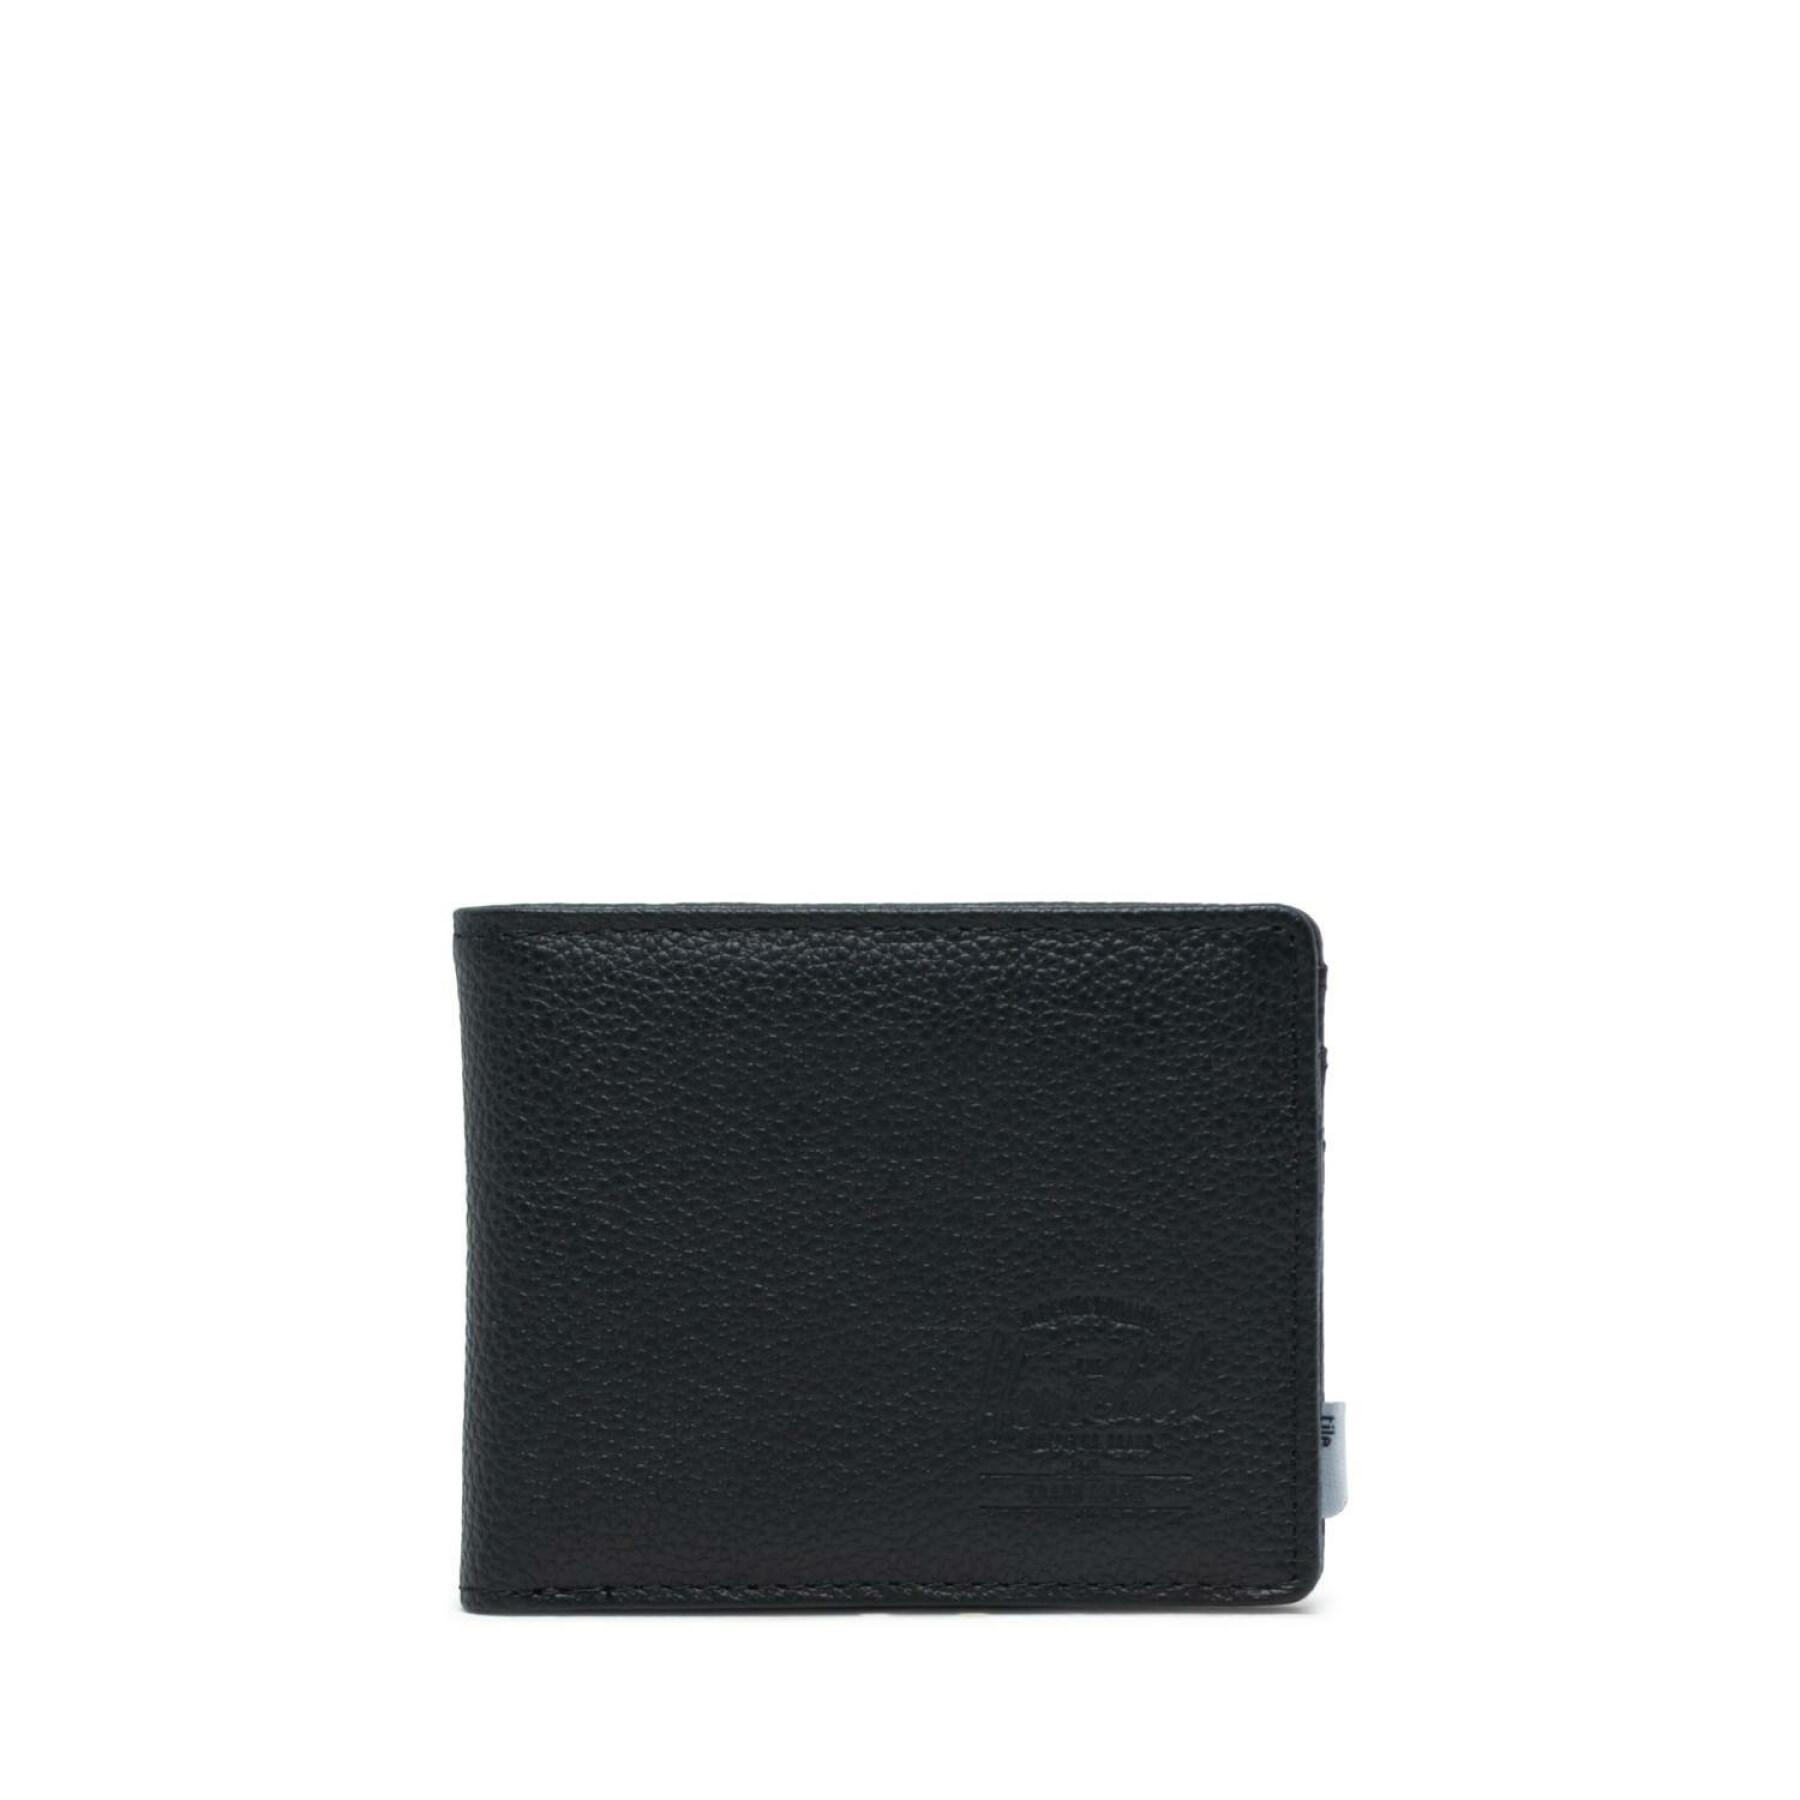 Cartera Herschel black pebbled leather